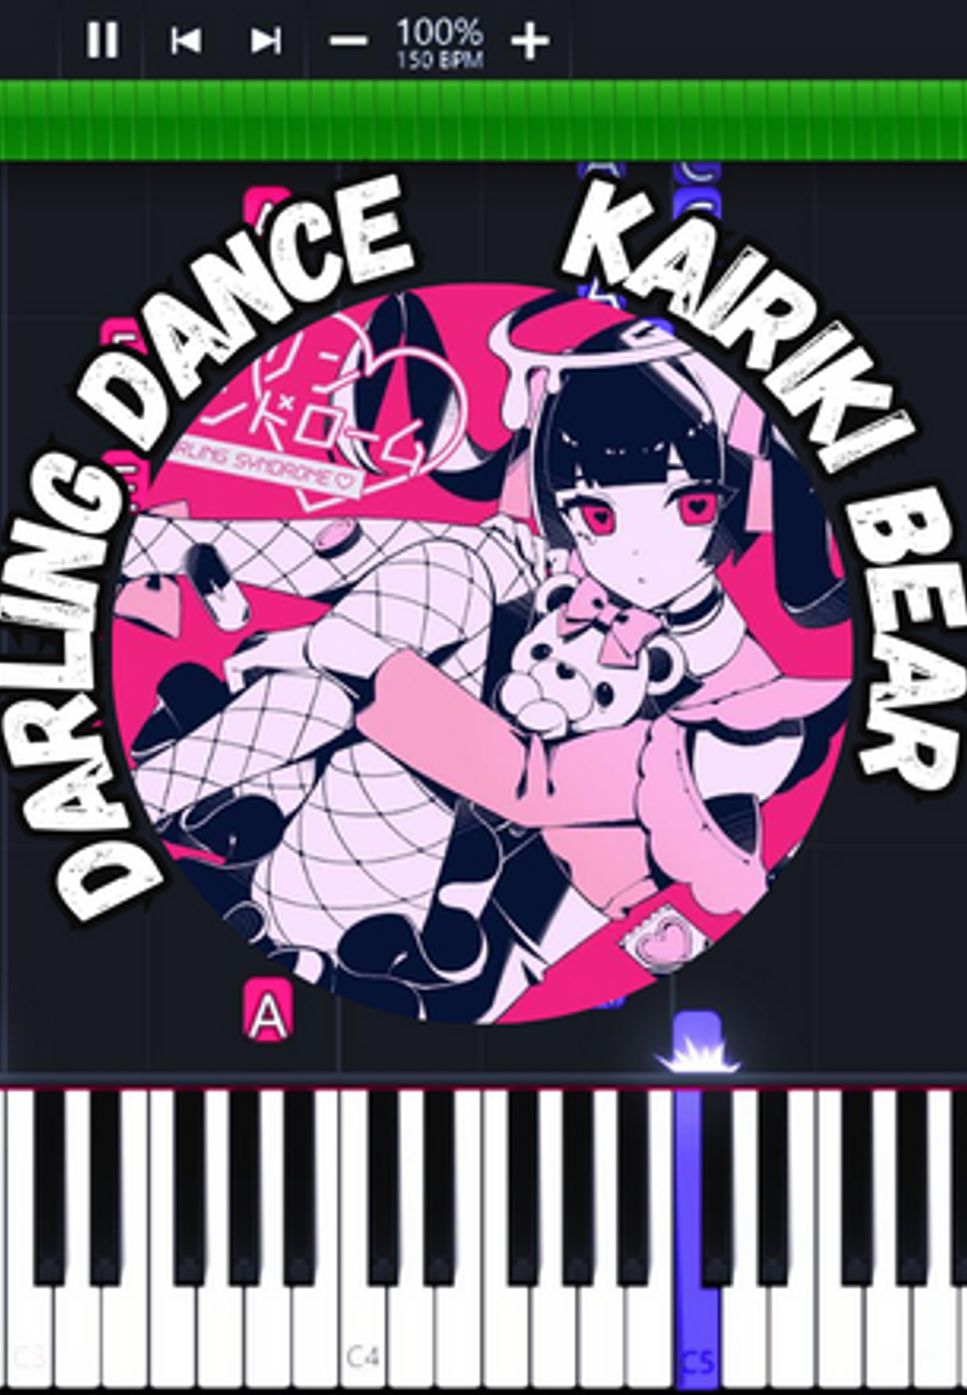 Kairiki Bear - Darling Dance by Marco D.